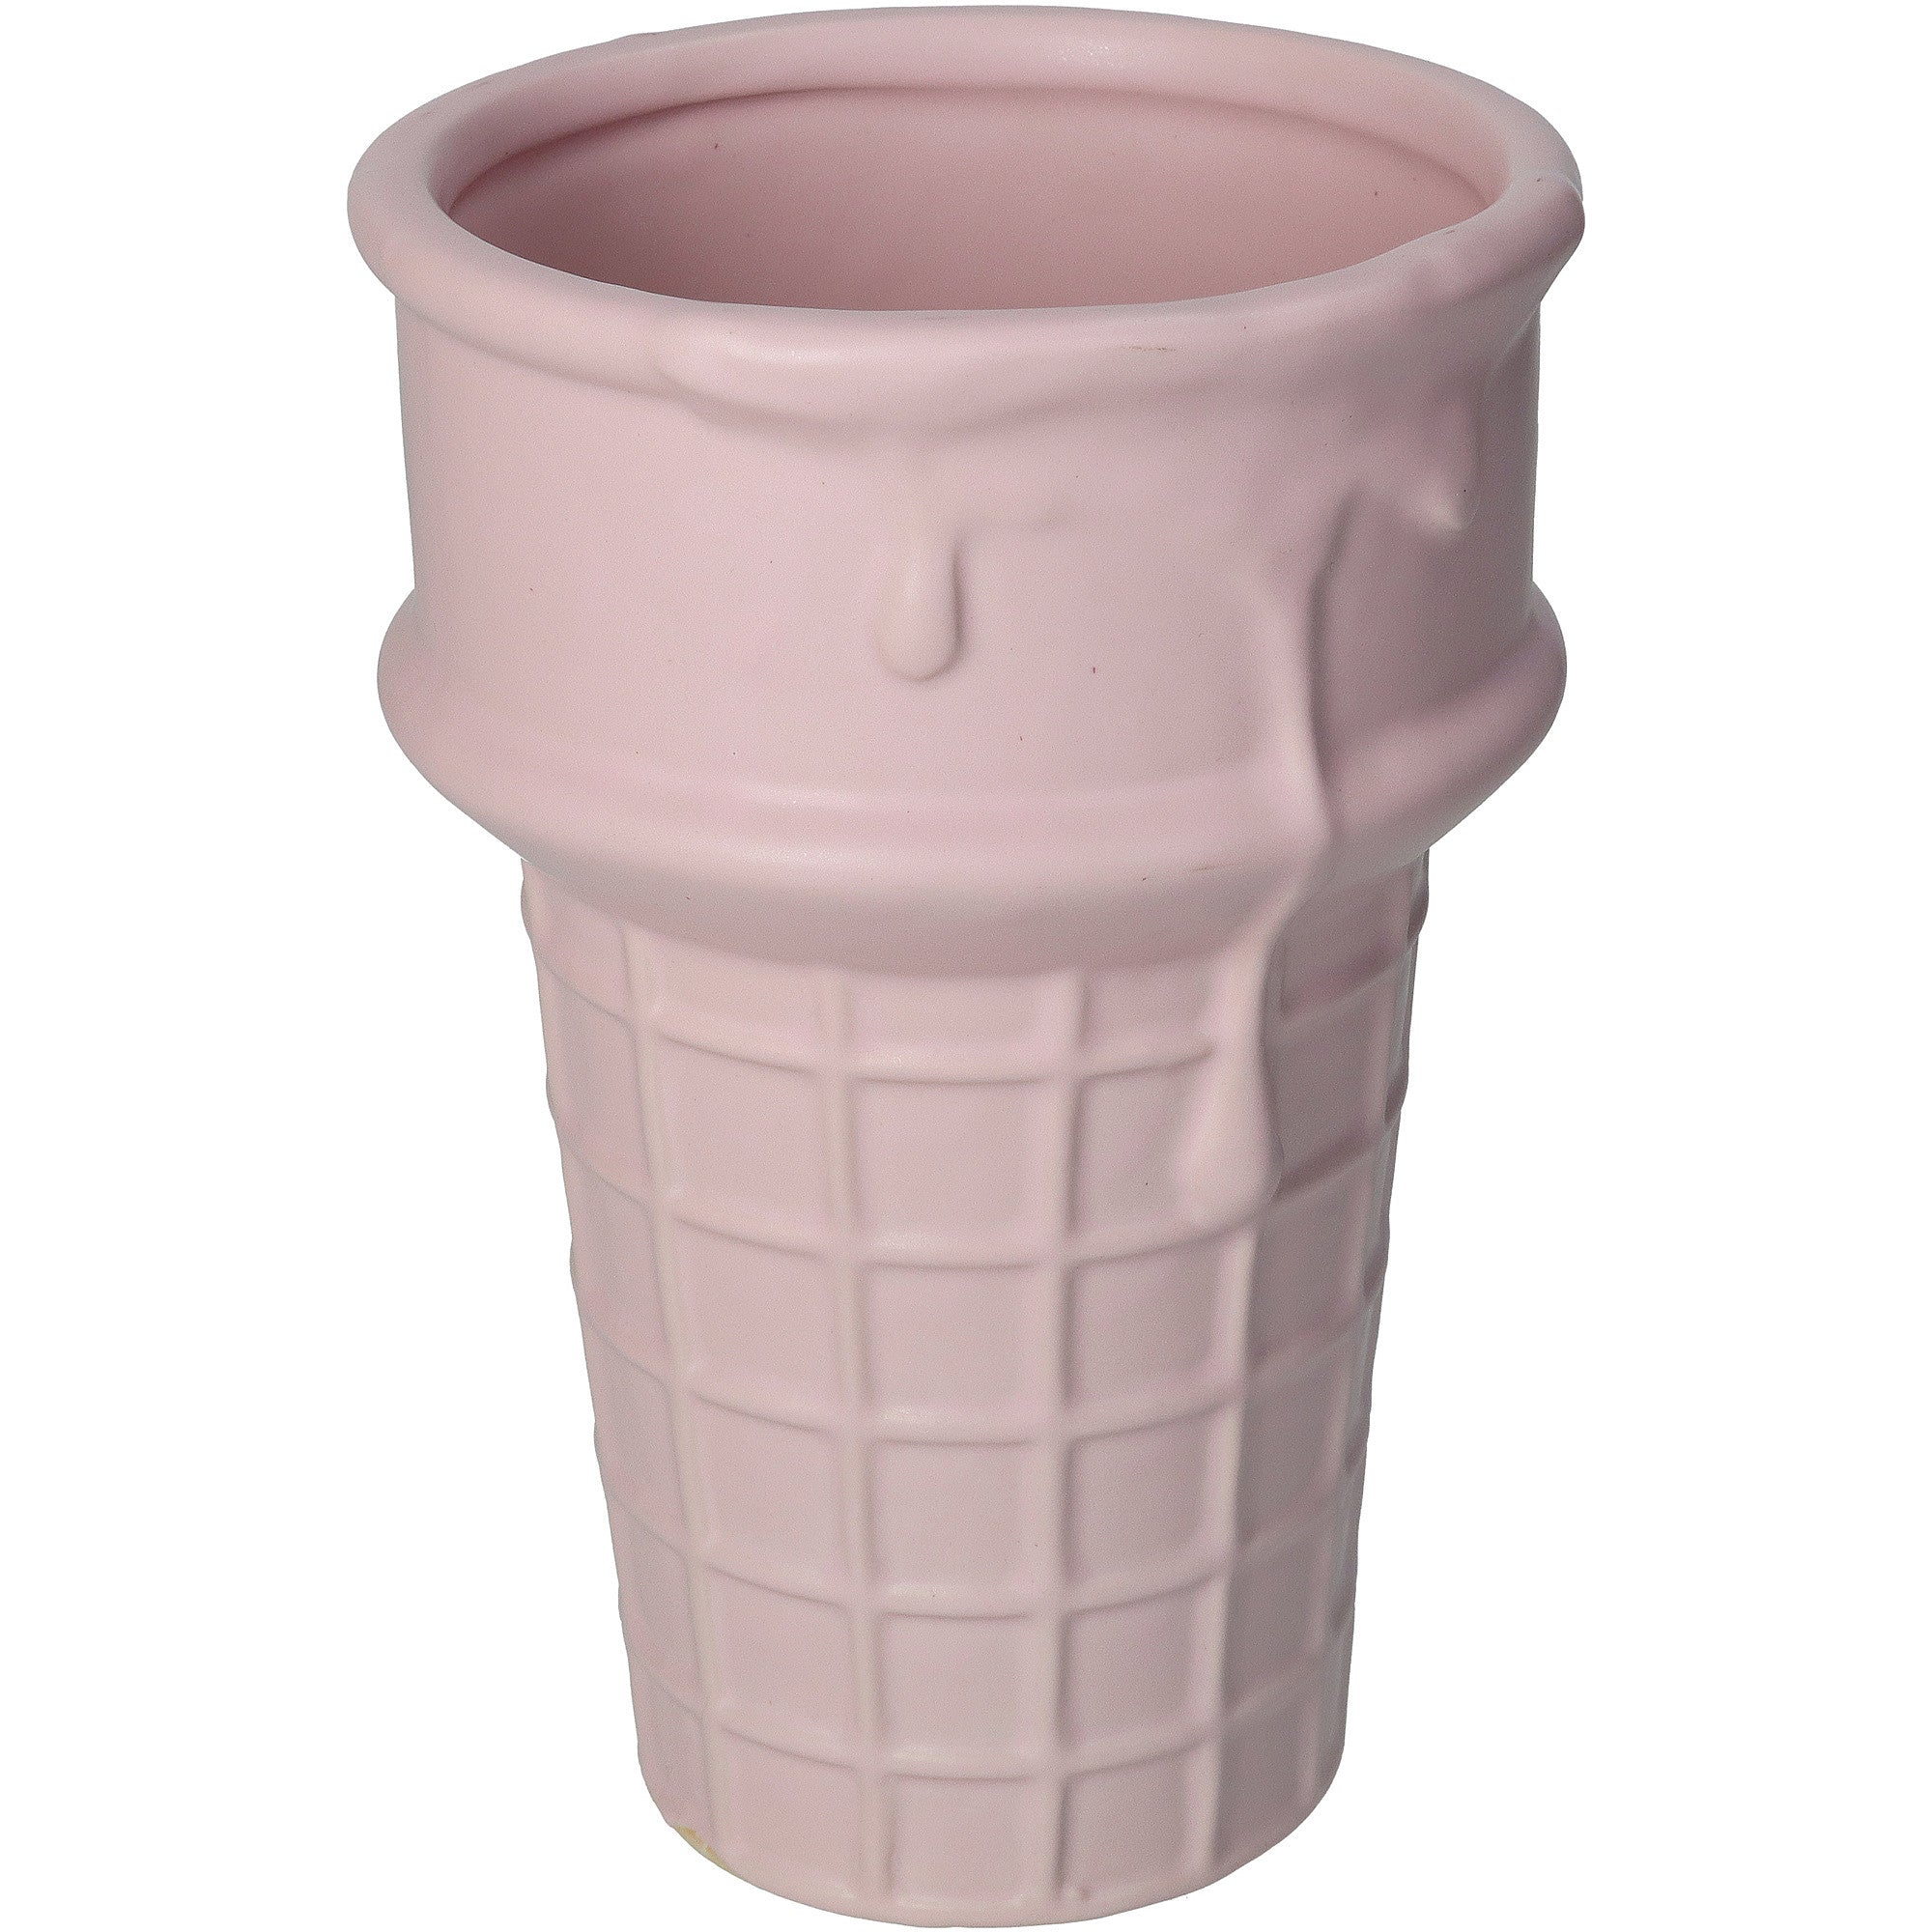 Quirky Pink Ice Cream Cone Plant Pot